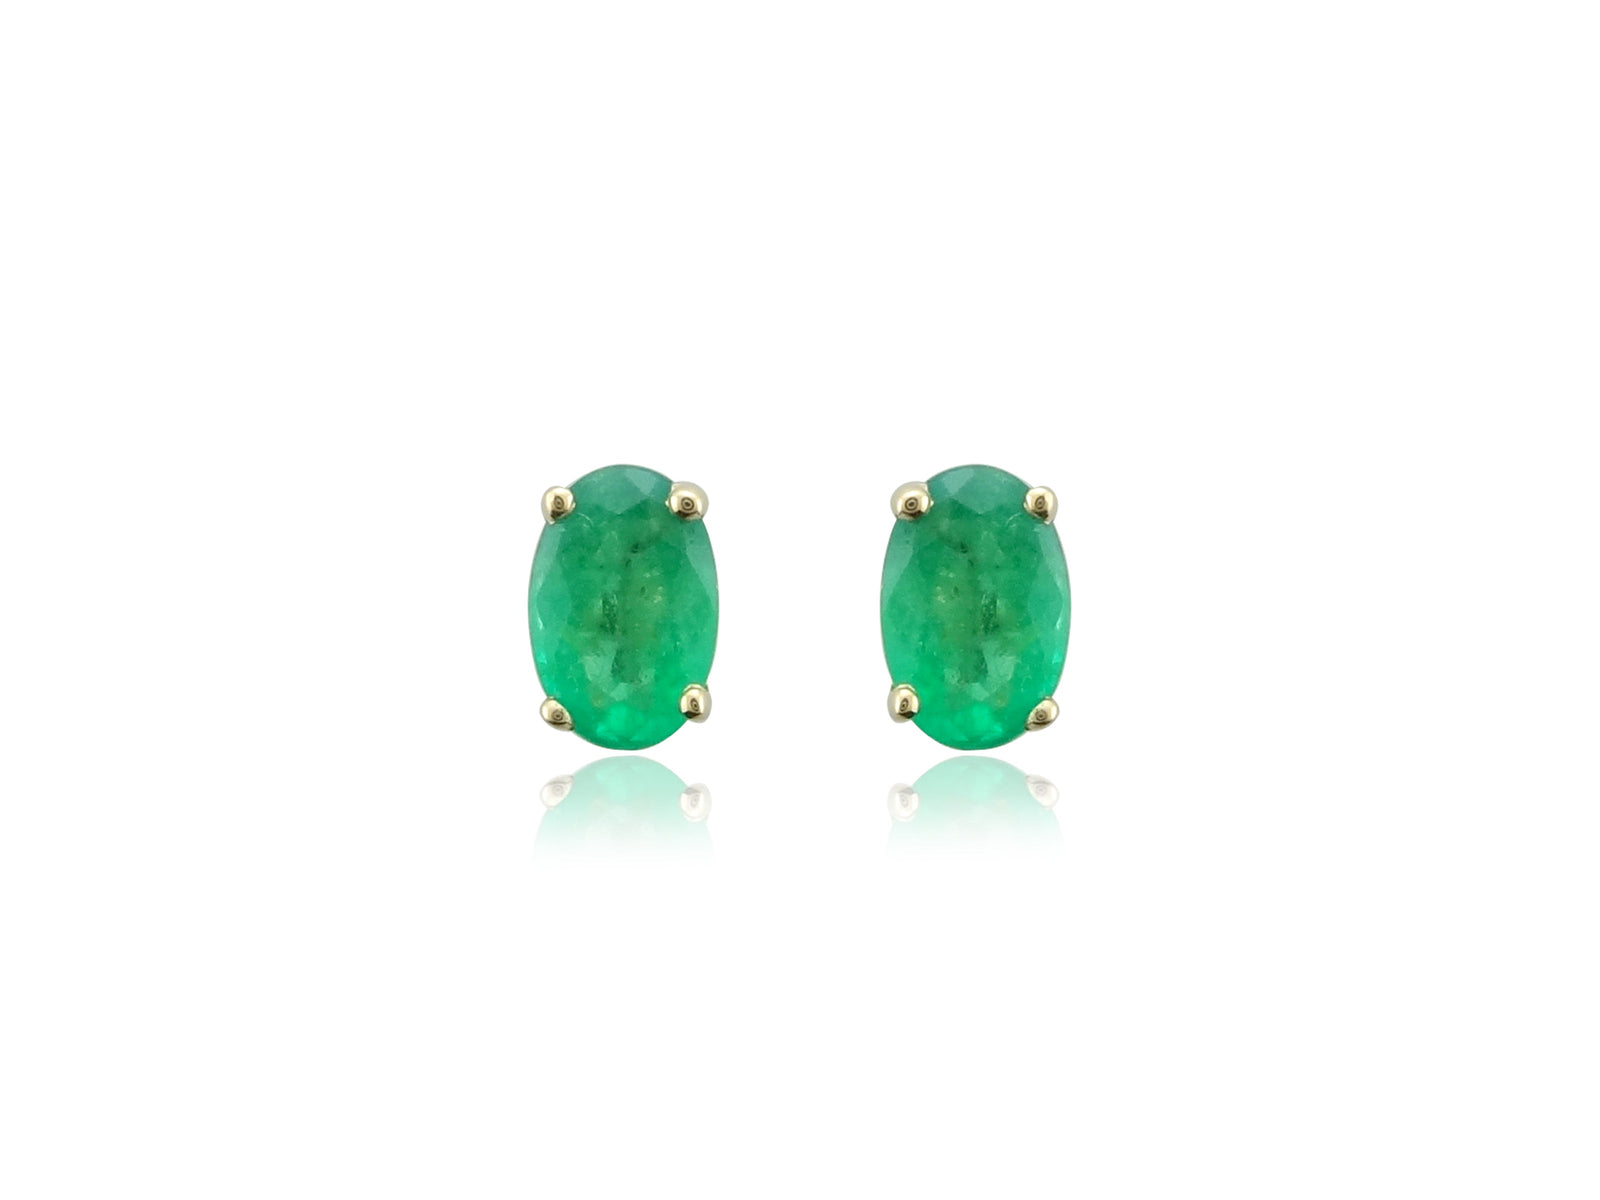 9ct gold 6x4mm oval emerald stud earrings